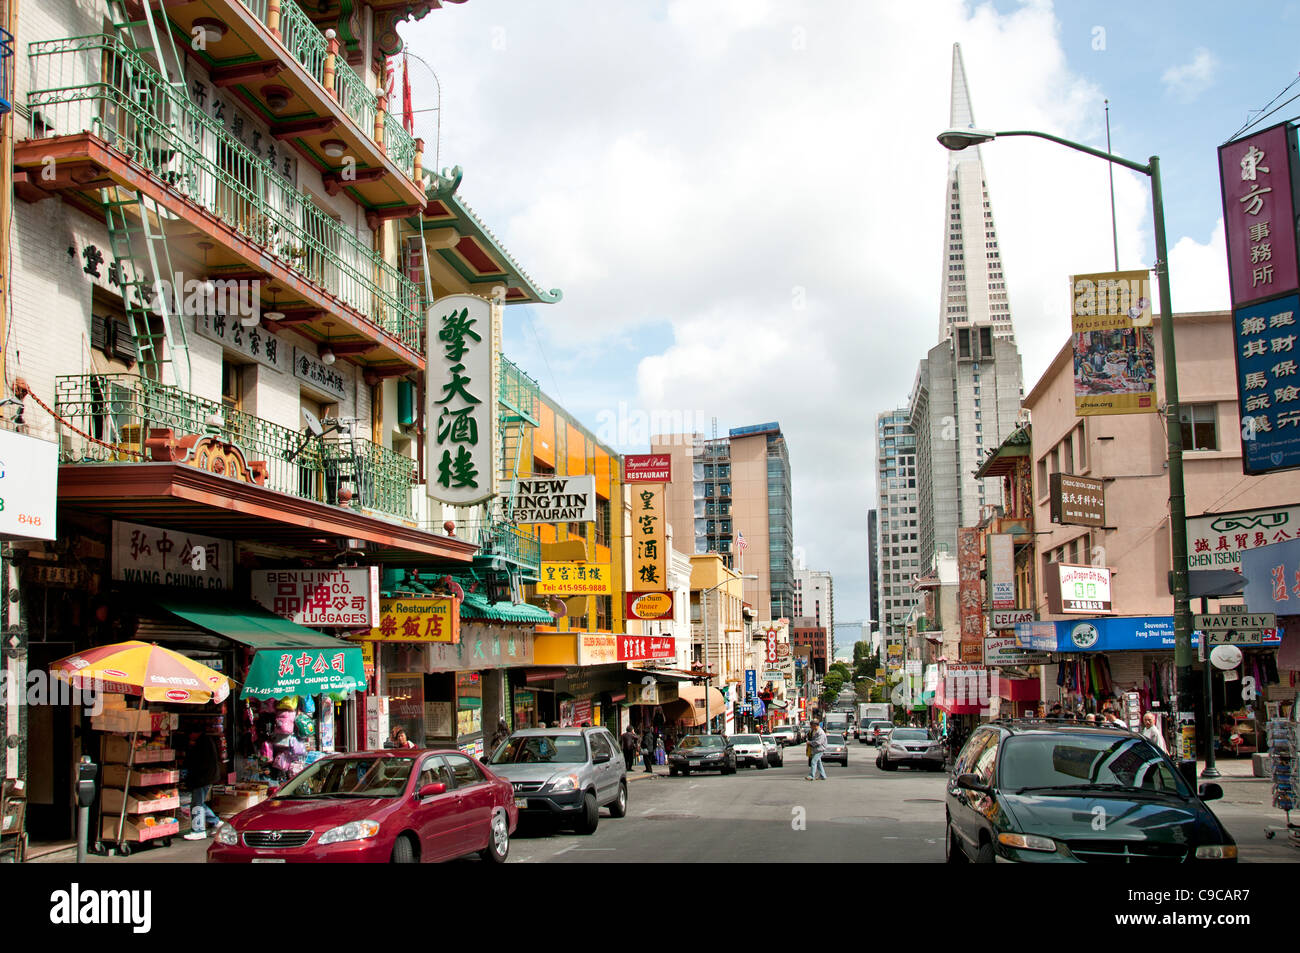 Chinatown China Town San Francisco California USA amerikanische Vereinigte Staaten von Amerika Stockfoto